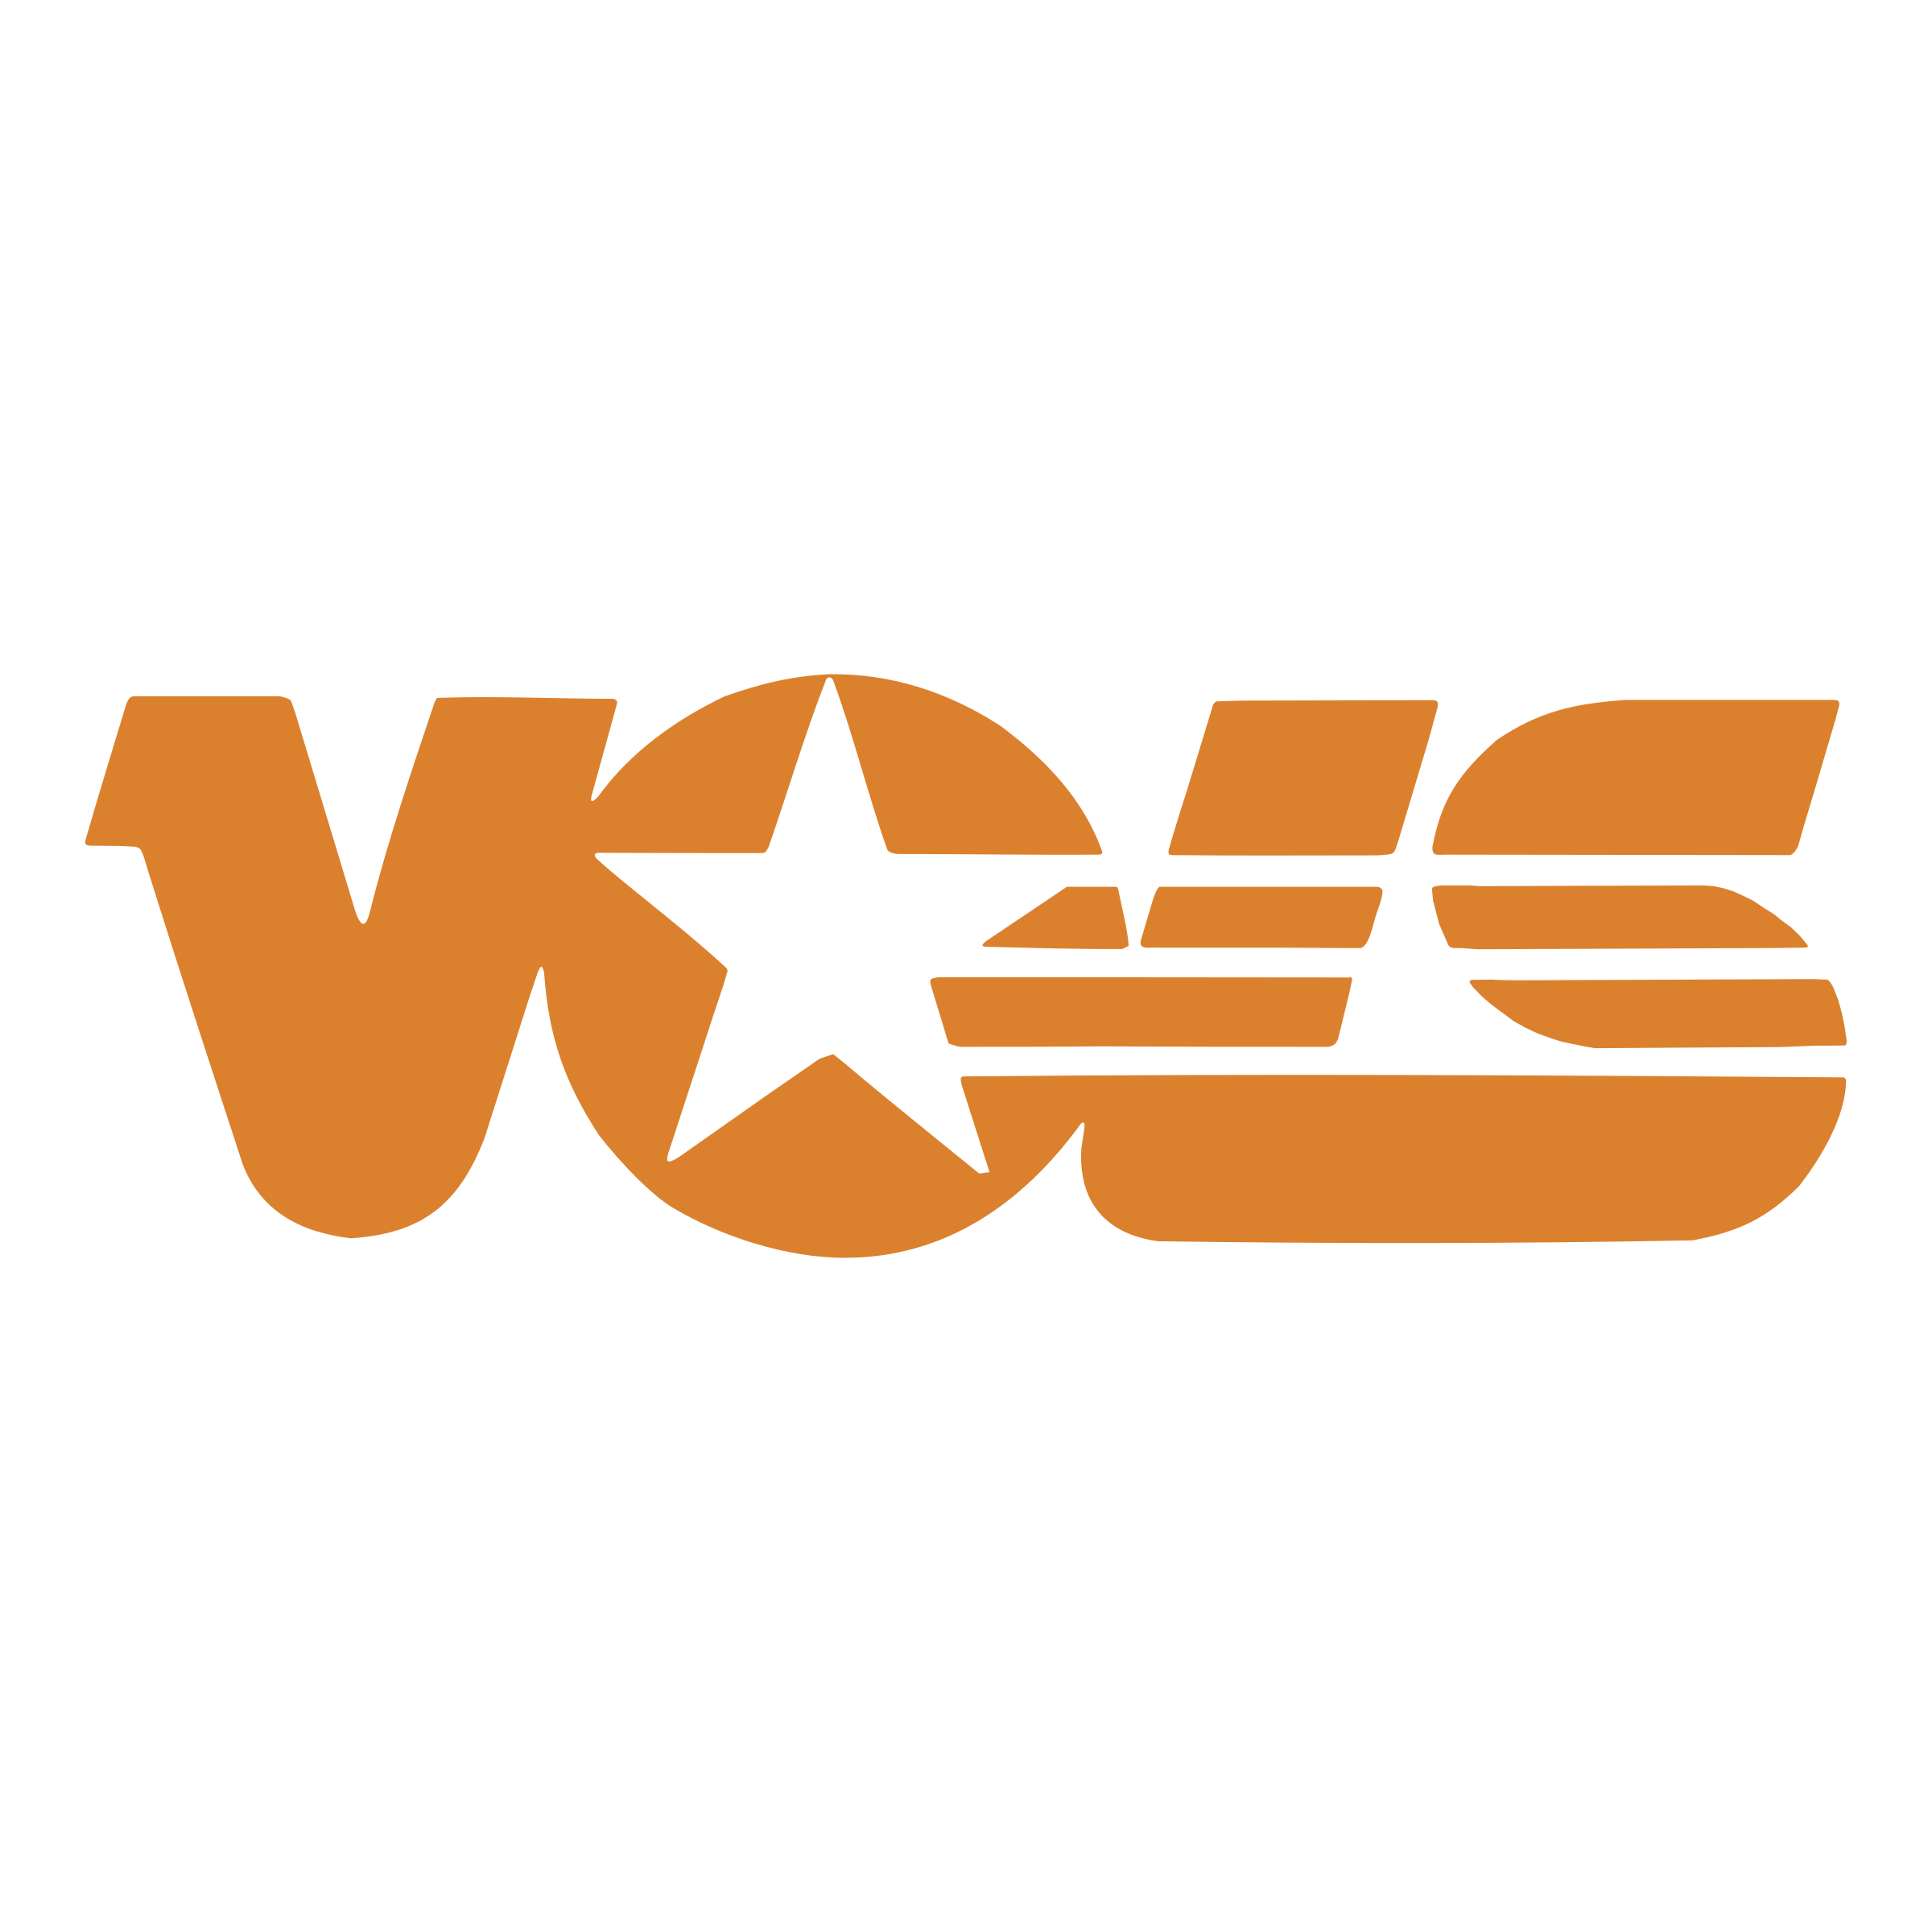 Vols Logo - Tennessee Vols Logo PNG Transparent & SVG Vector - Freebie Supply